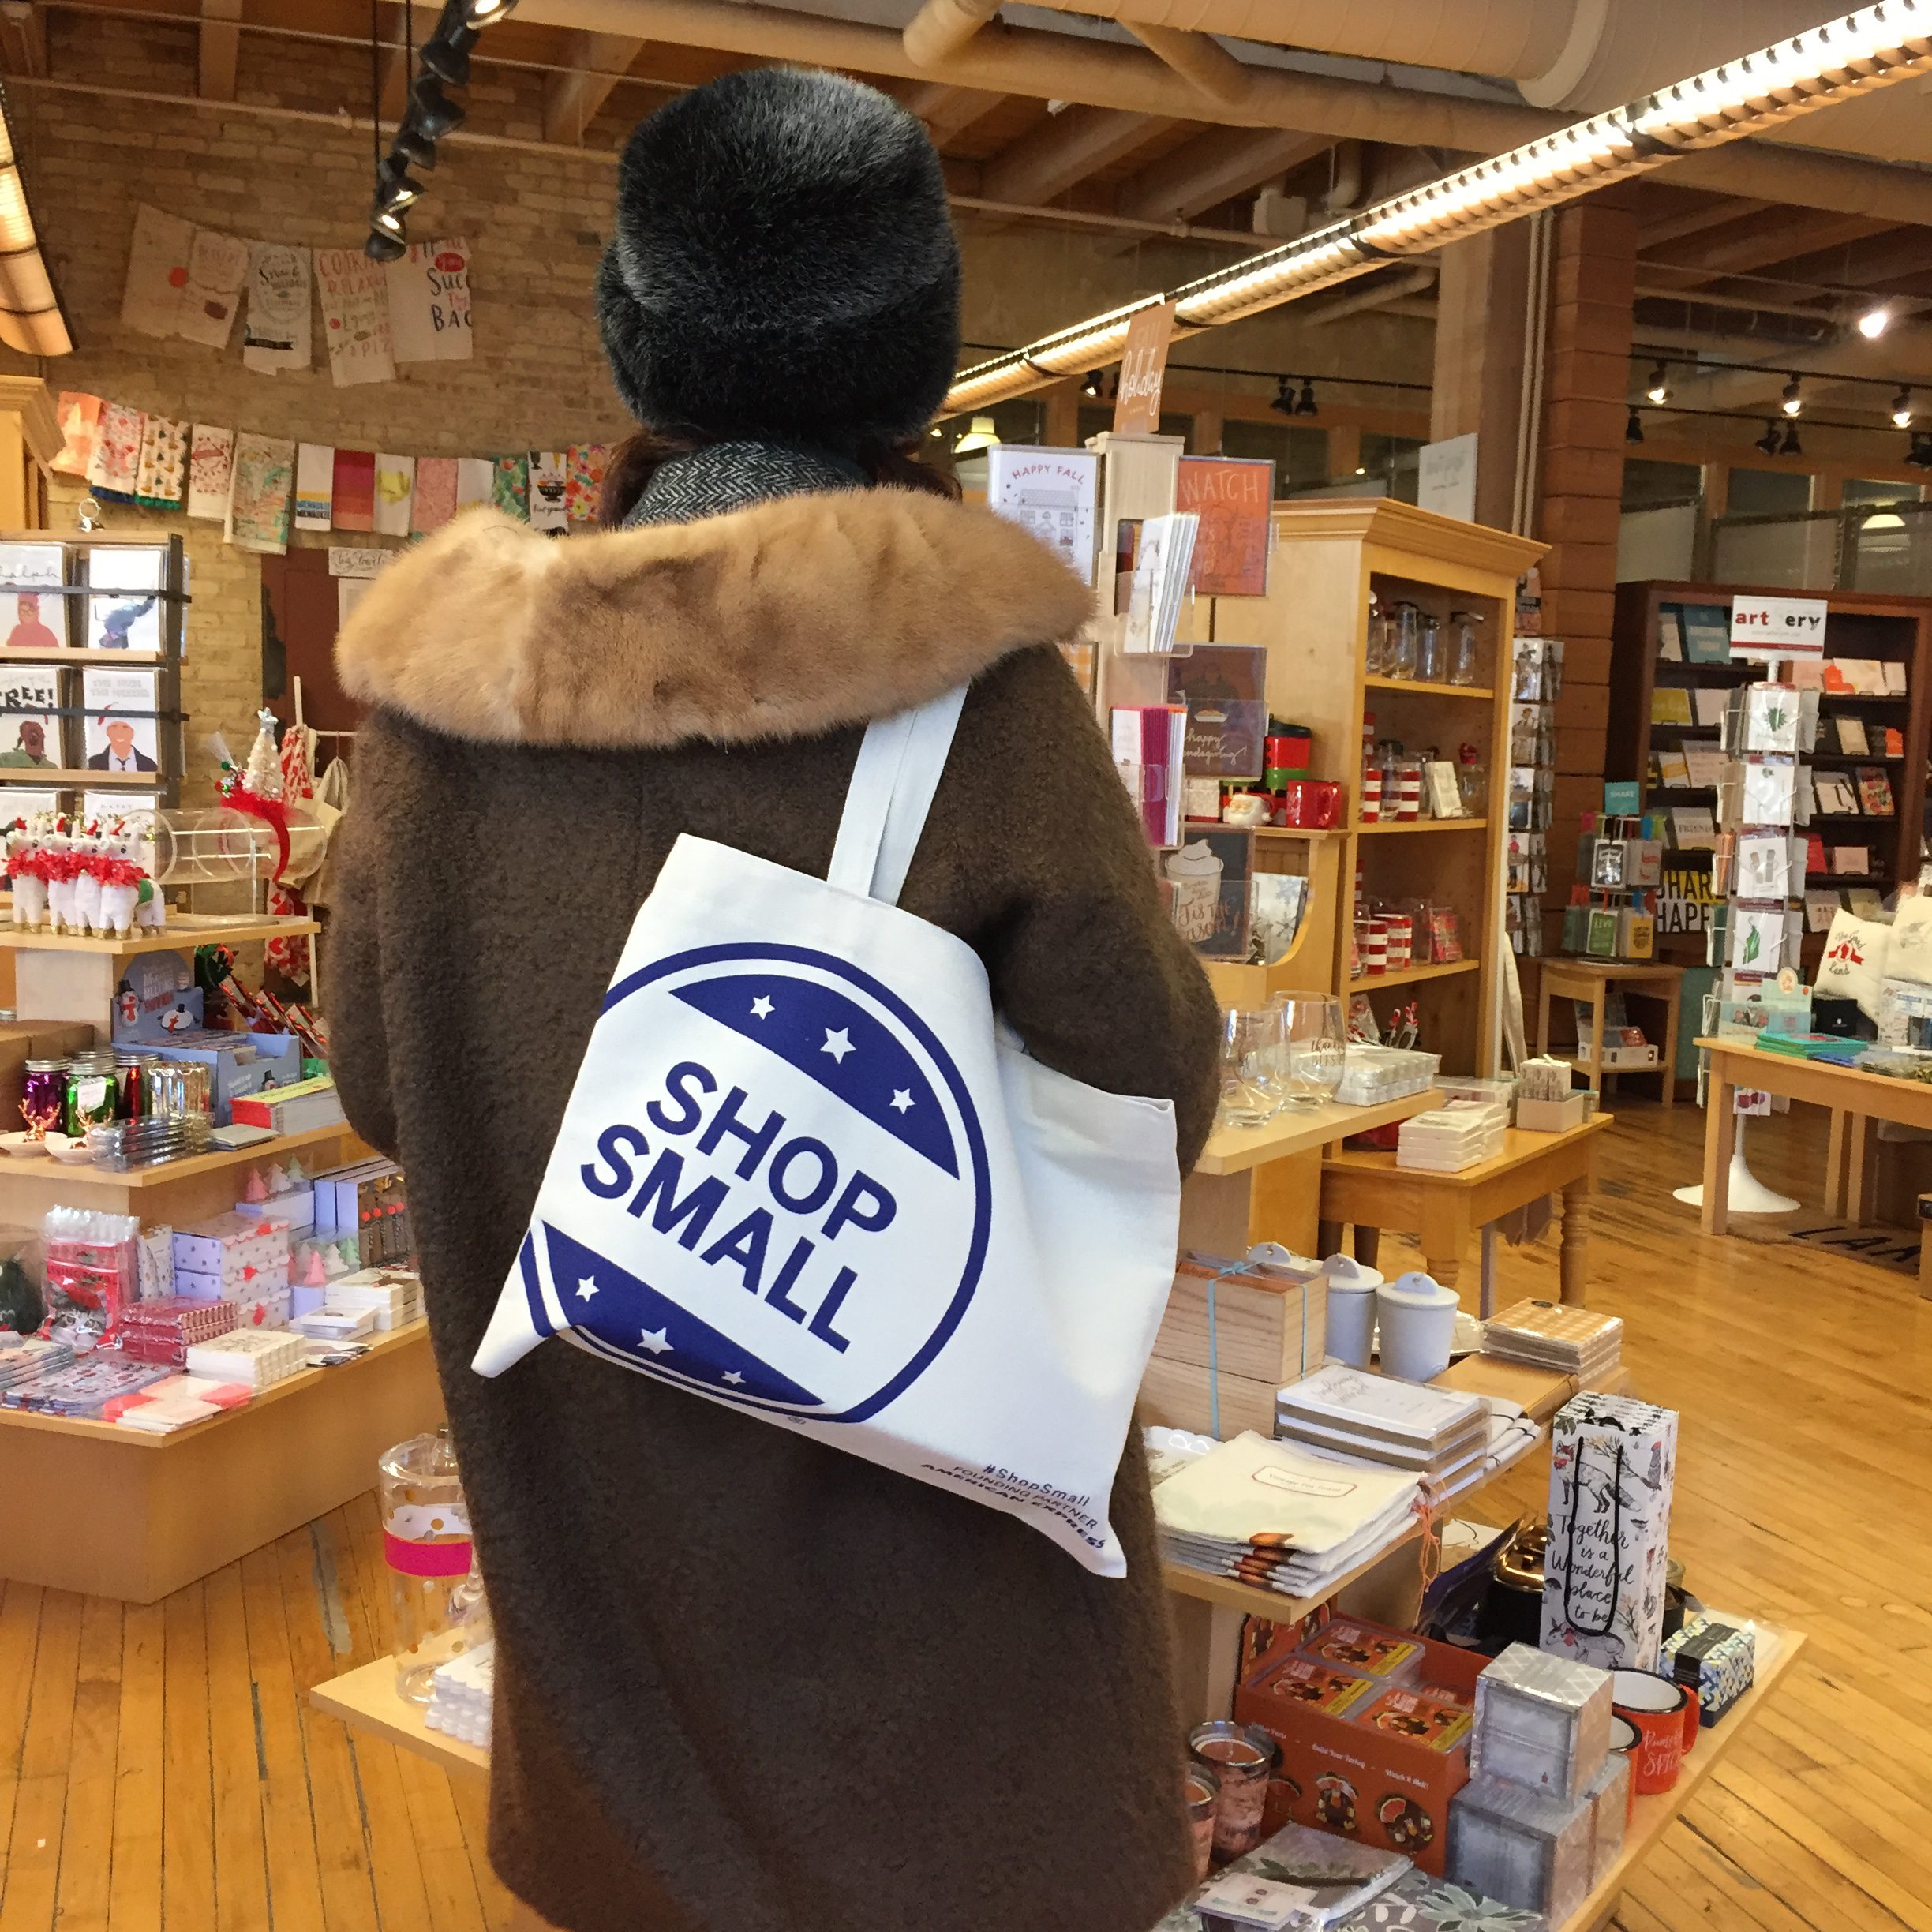 Shop Small. Photo courtesy of the Historic Third Ward Association.